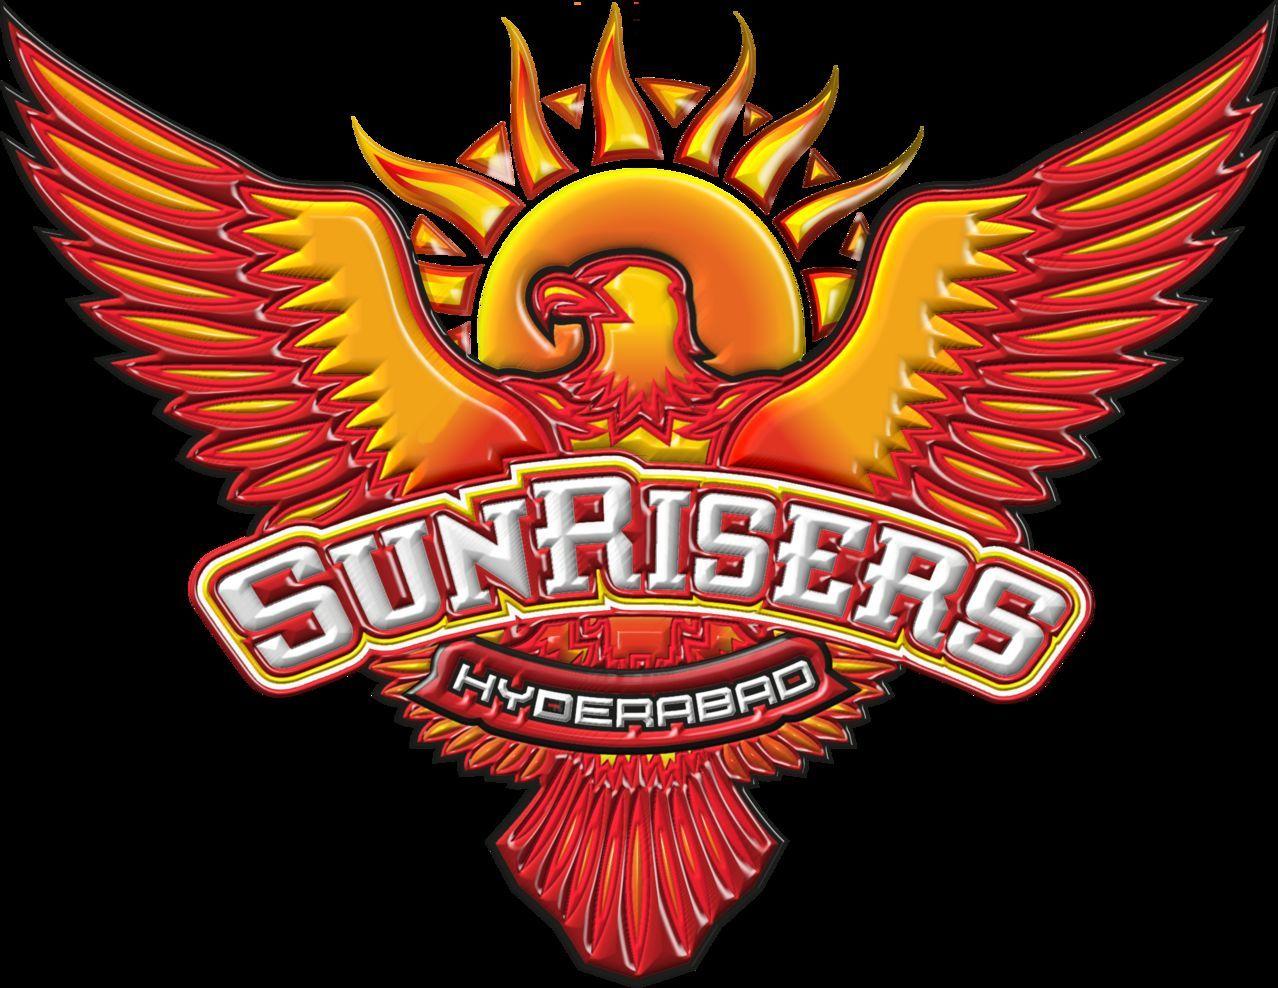 SRH Logo - Sunrisers Hyderabad Wallpaper